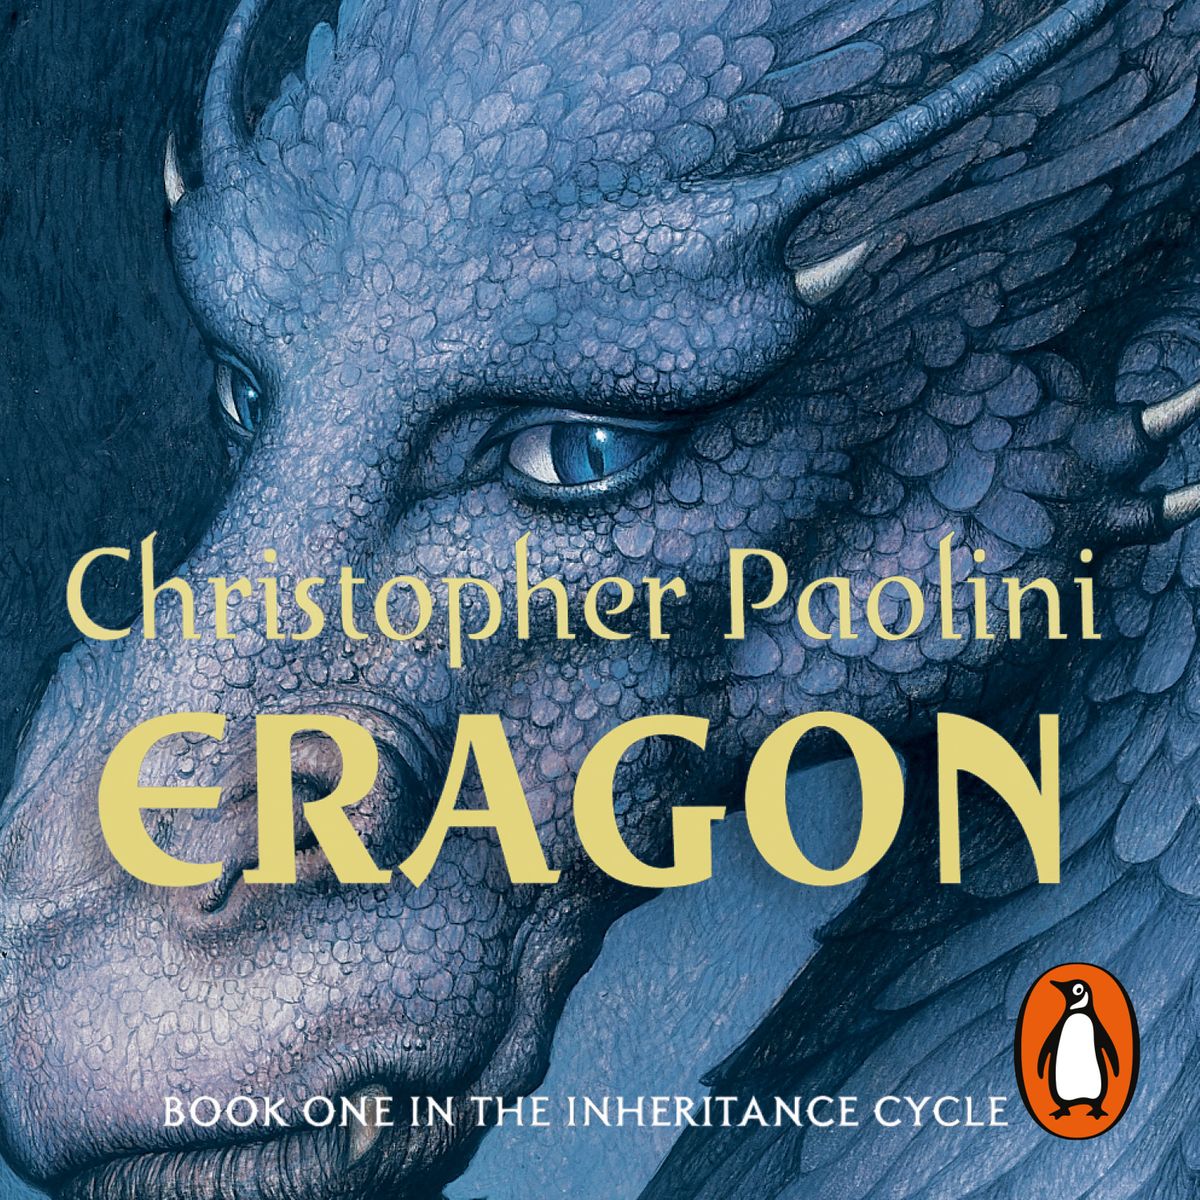 Eragon Author Reveals New Sci-Fi Novel